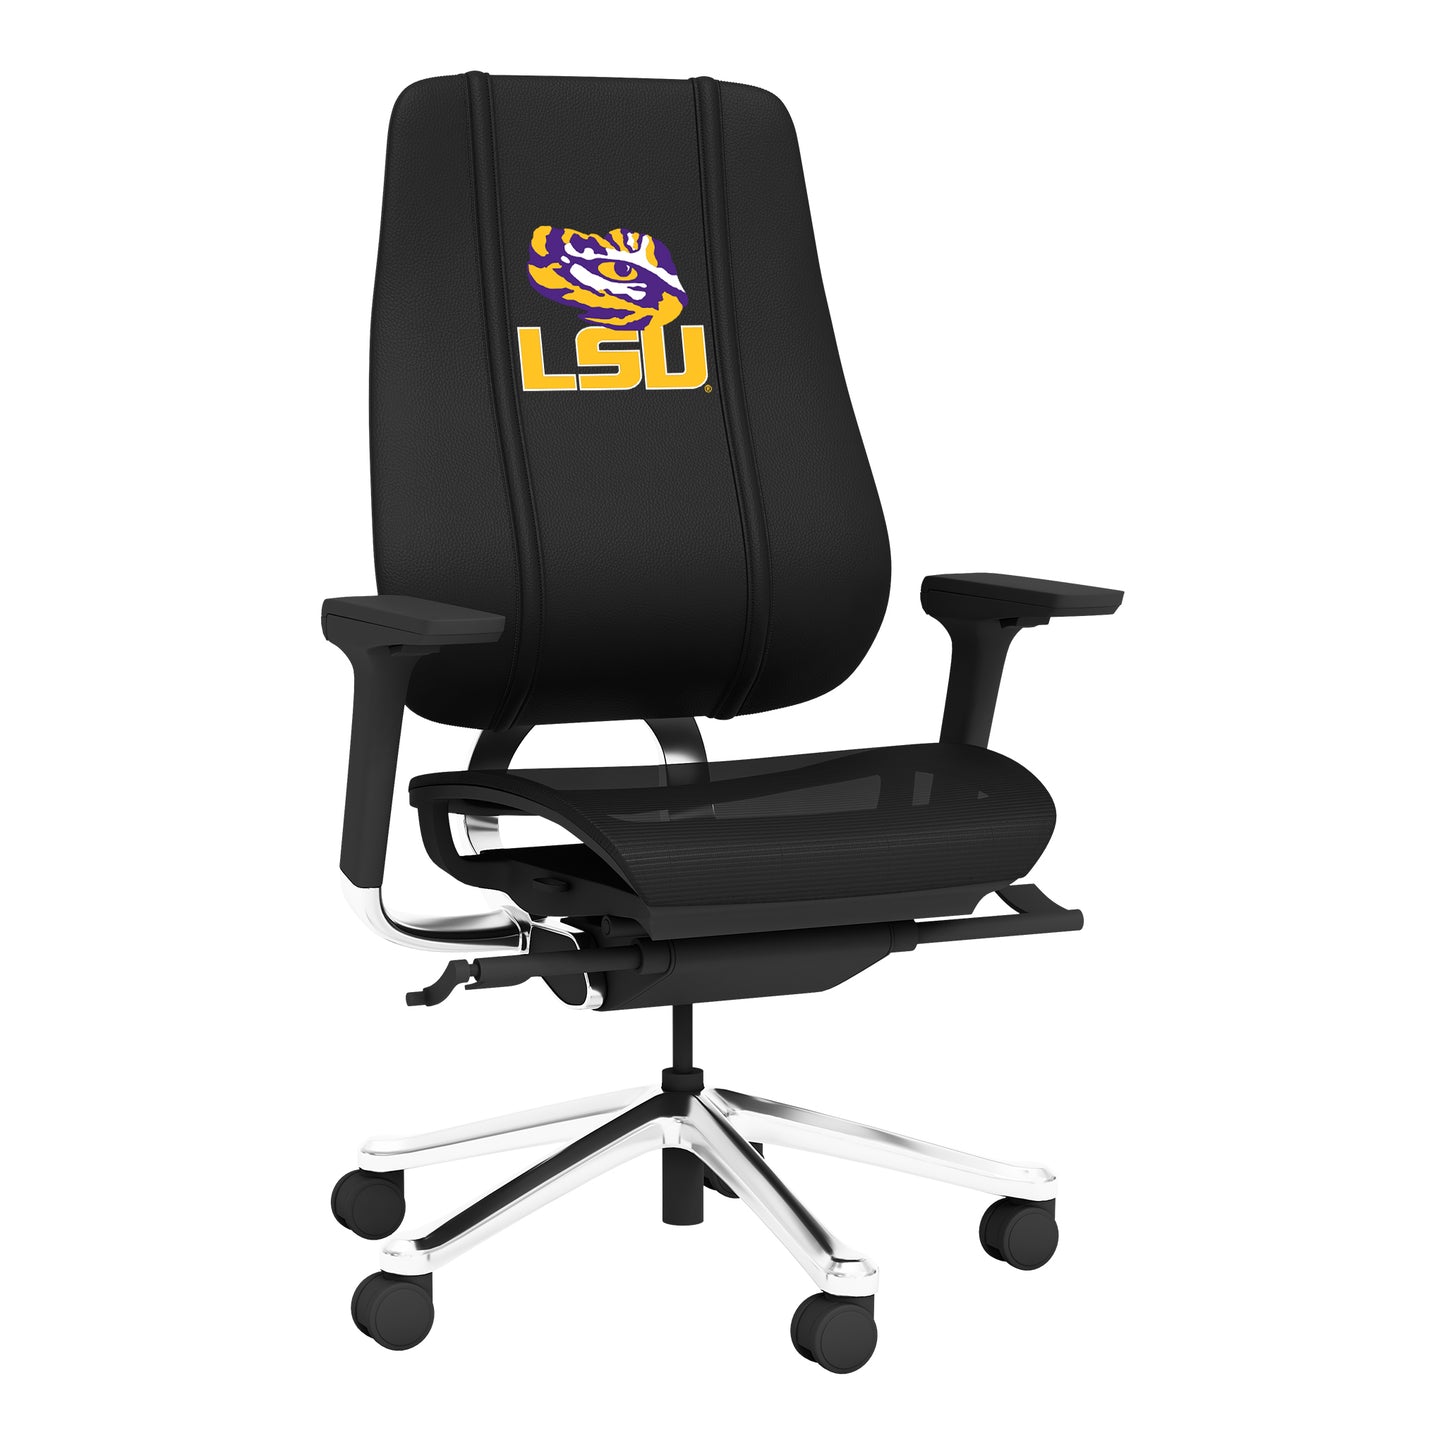 PhantomX Gaming Chair with LSU Tigers Logo